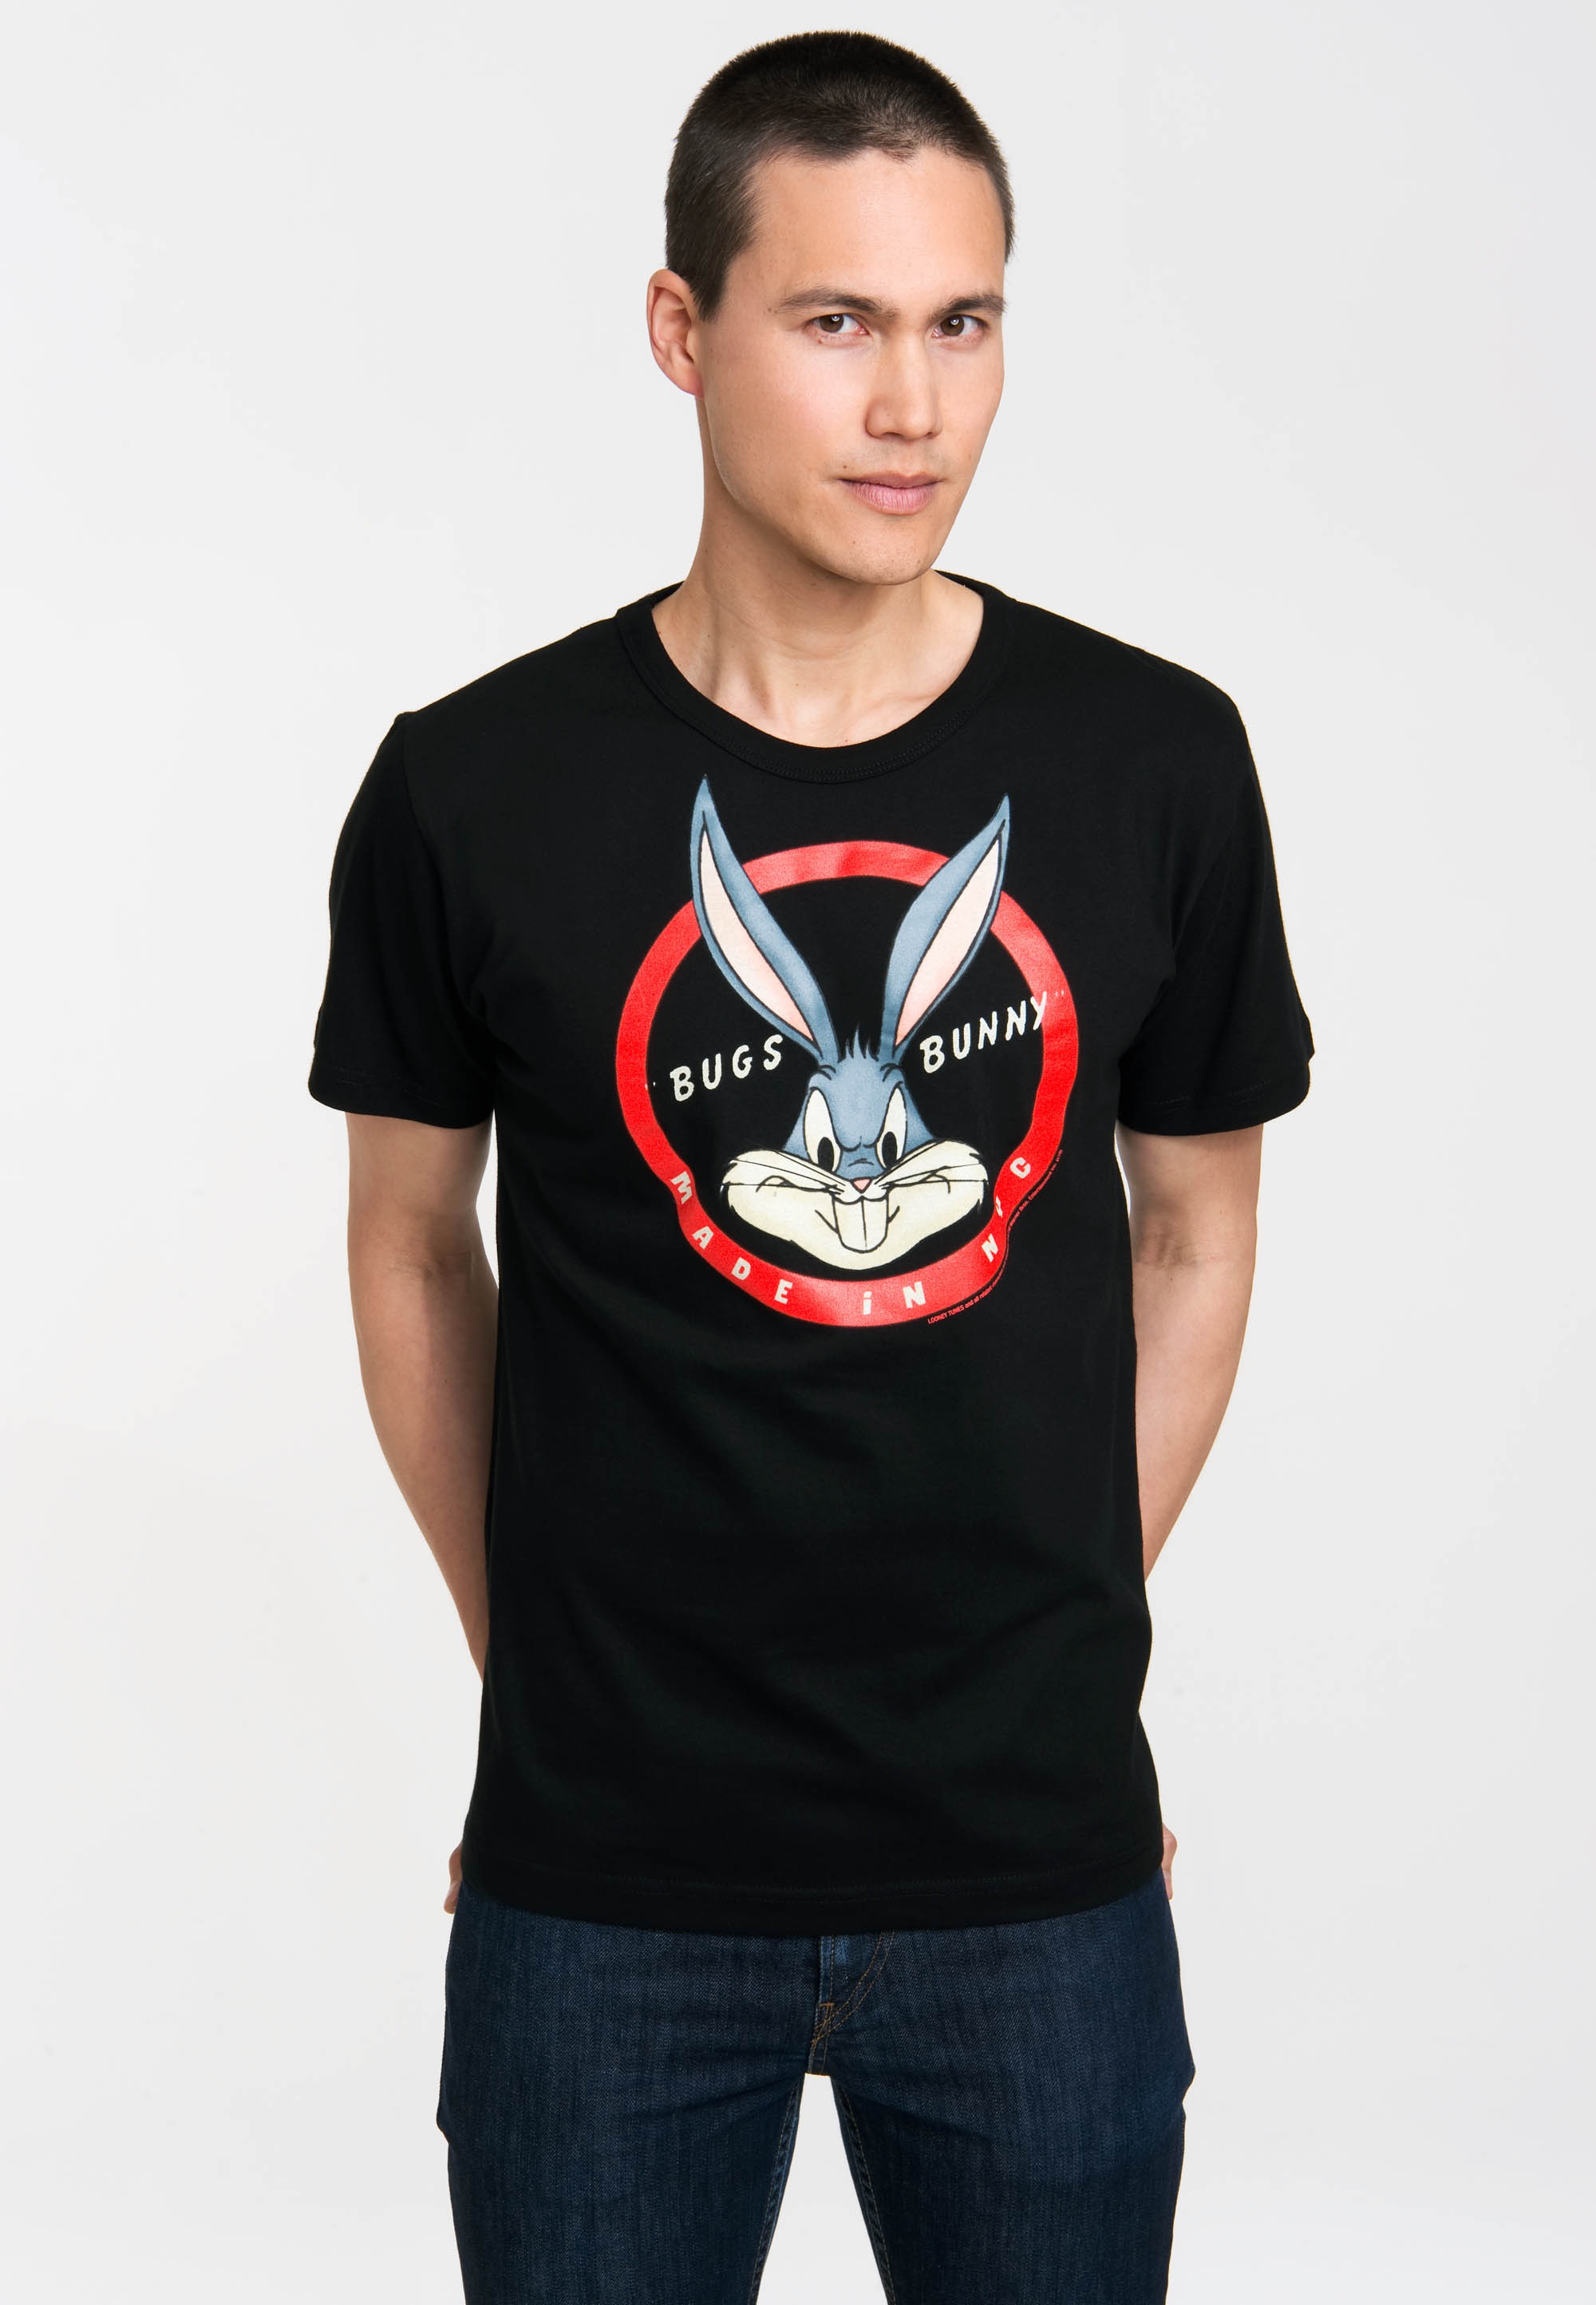 LOGOSHIRT T-Shirt »Bugs Bunny Made In NYC«, mit tollem Bugs Bunny-Print